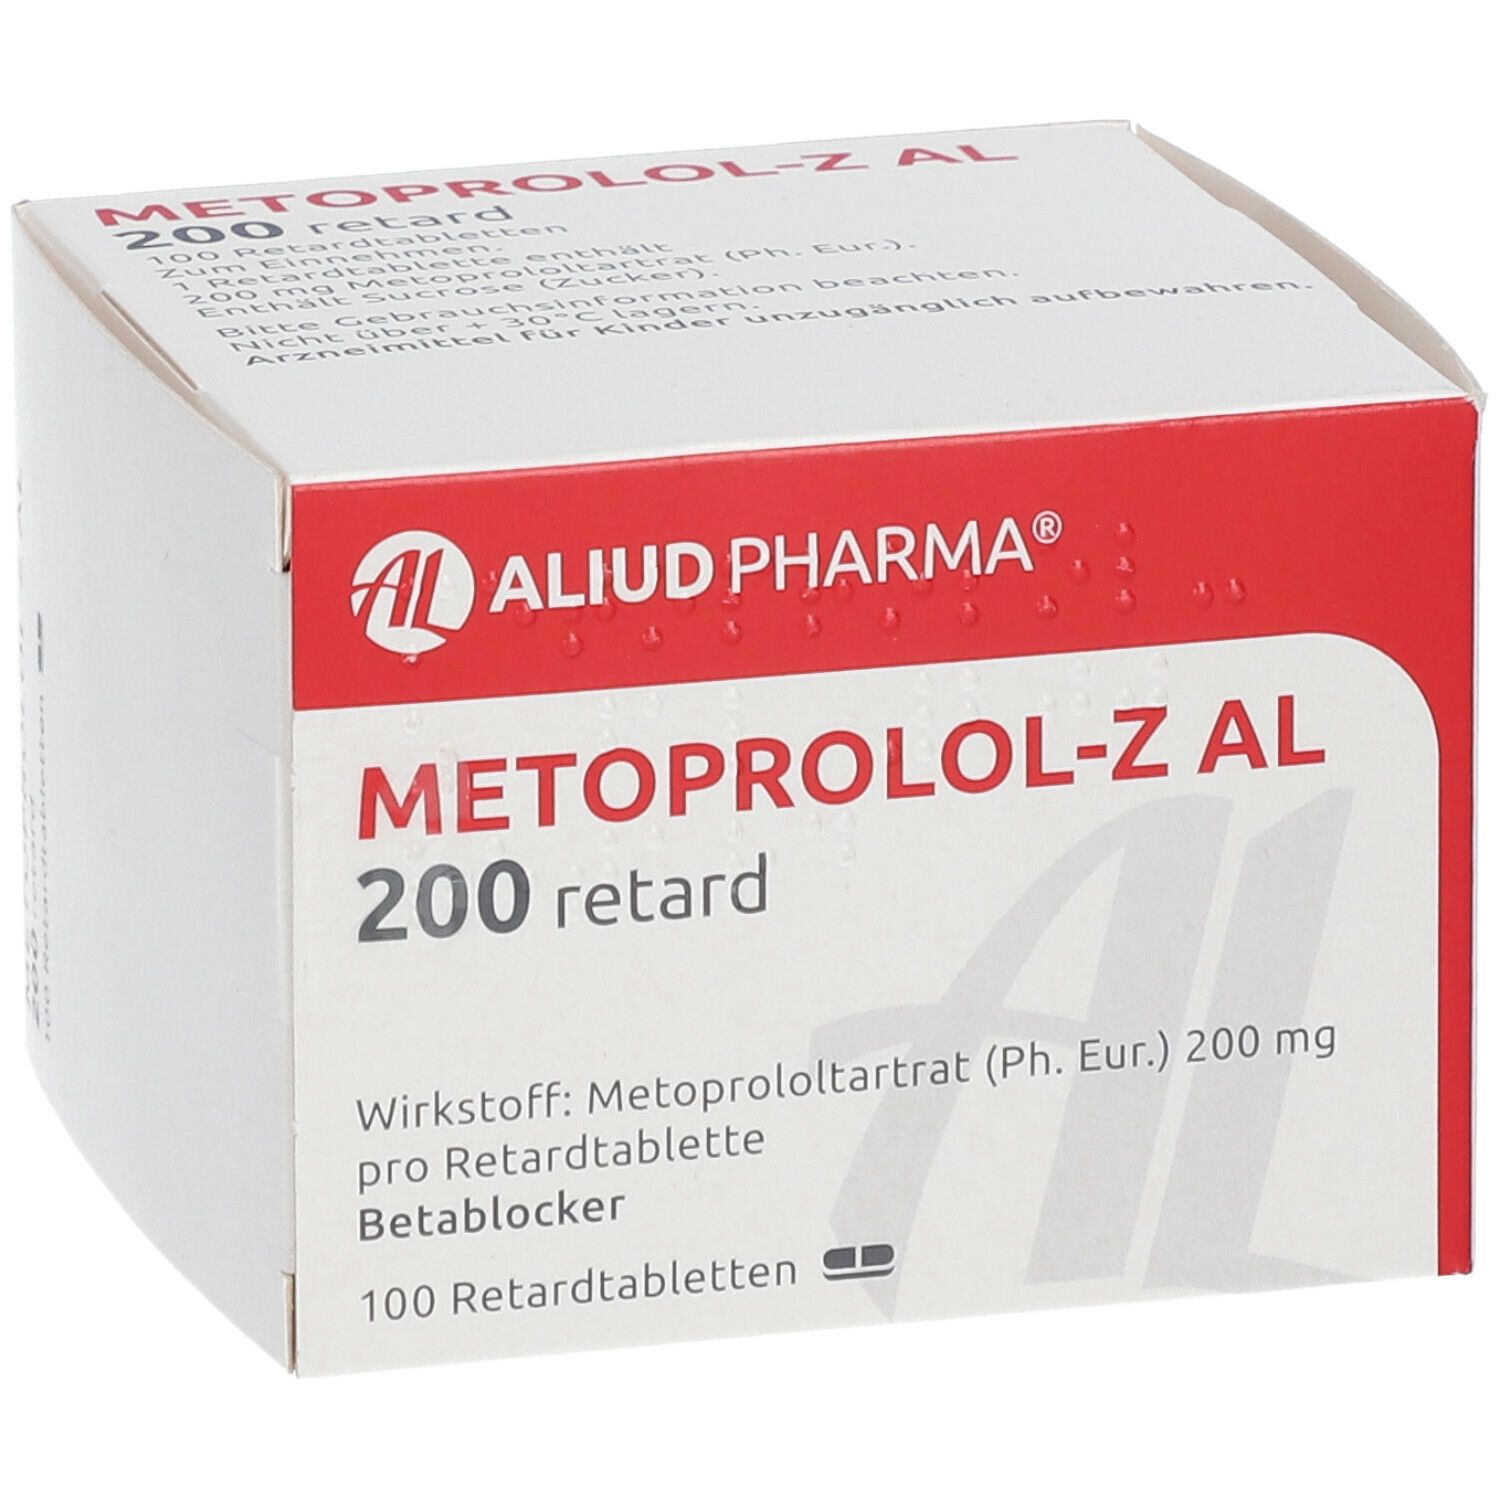 Metoprolol Z AL 200 retard